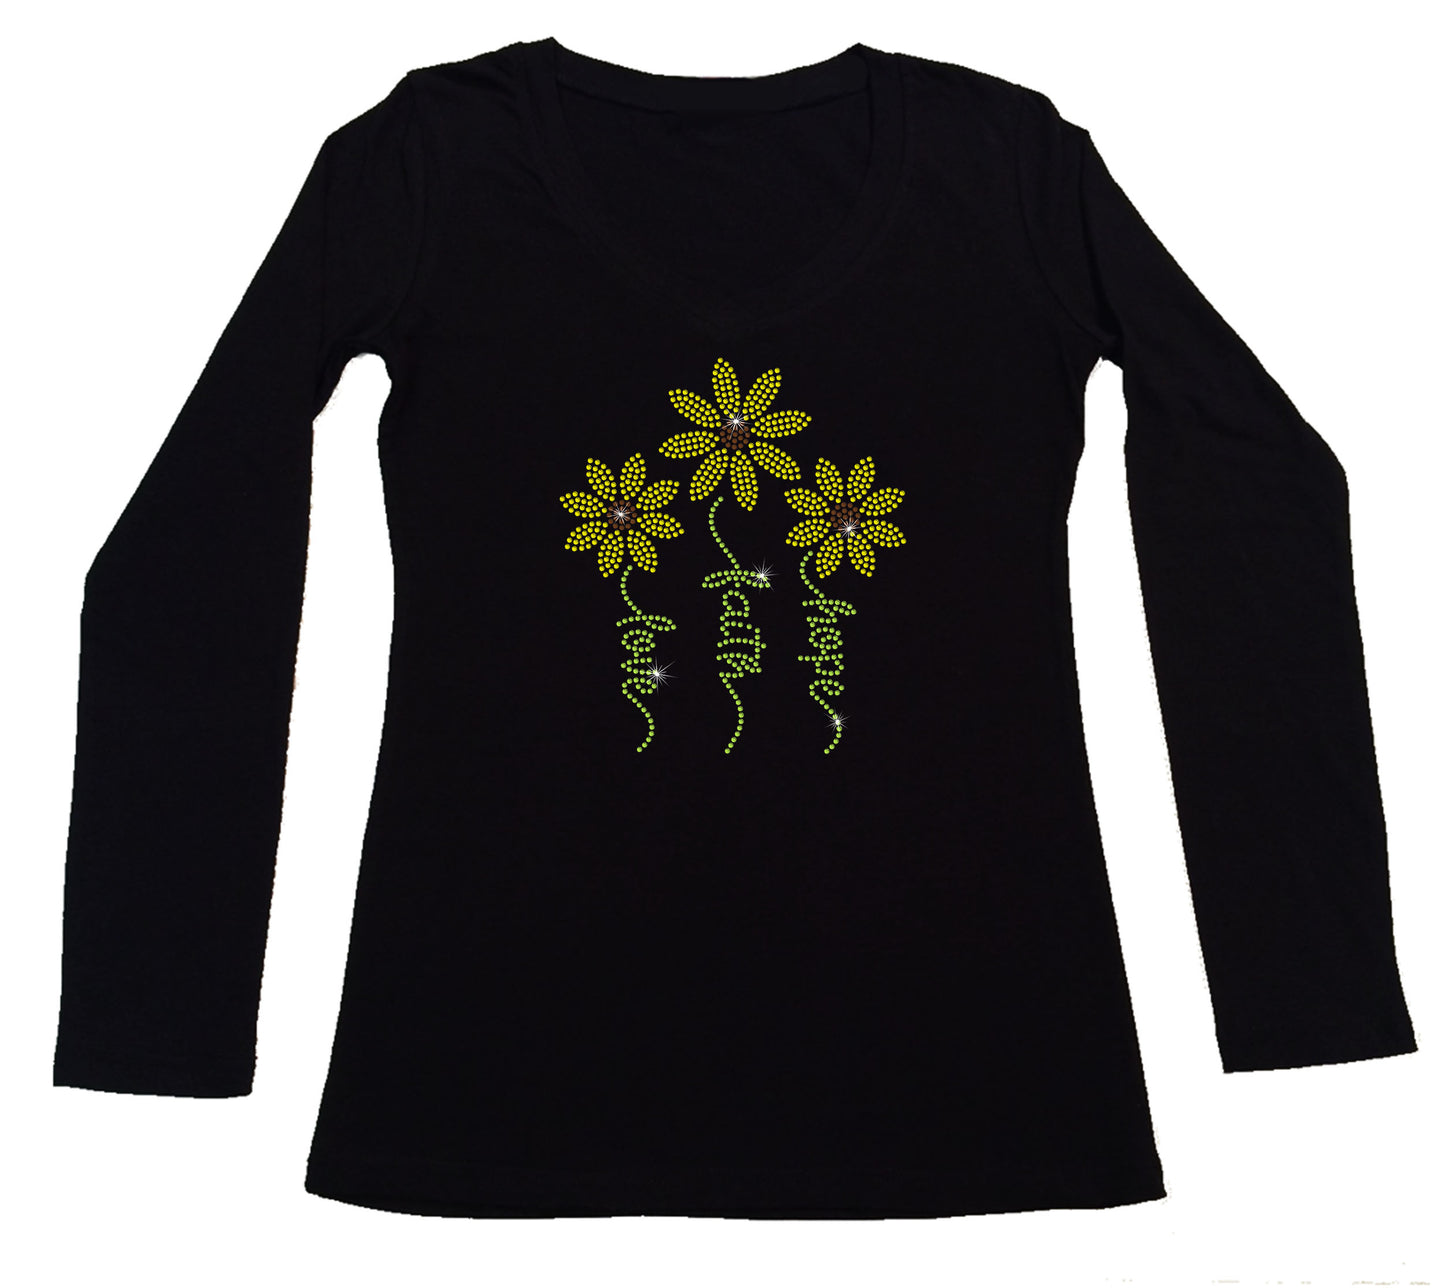 Women's Rhinestone Fitted Tight Snug Shirt Love, Faith, Hope Daisies Flowers - Daisy Shirt